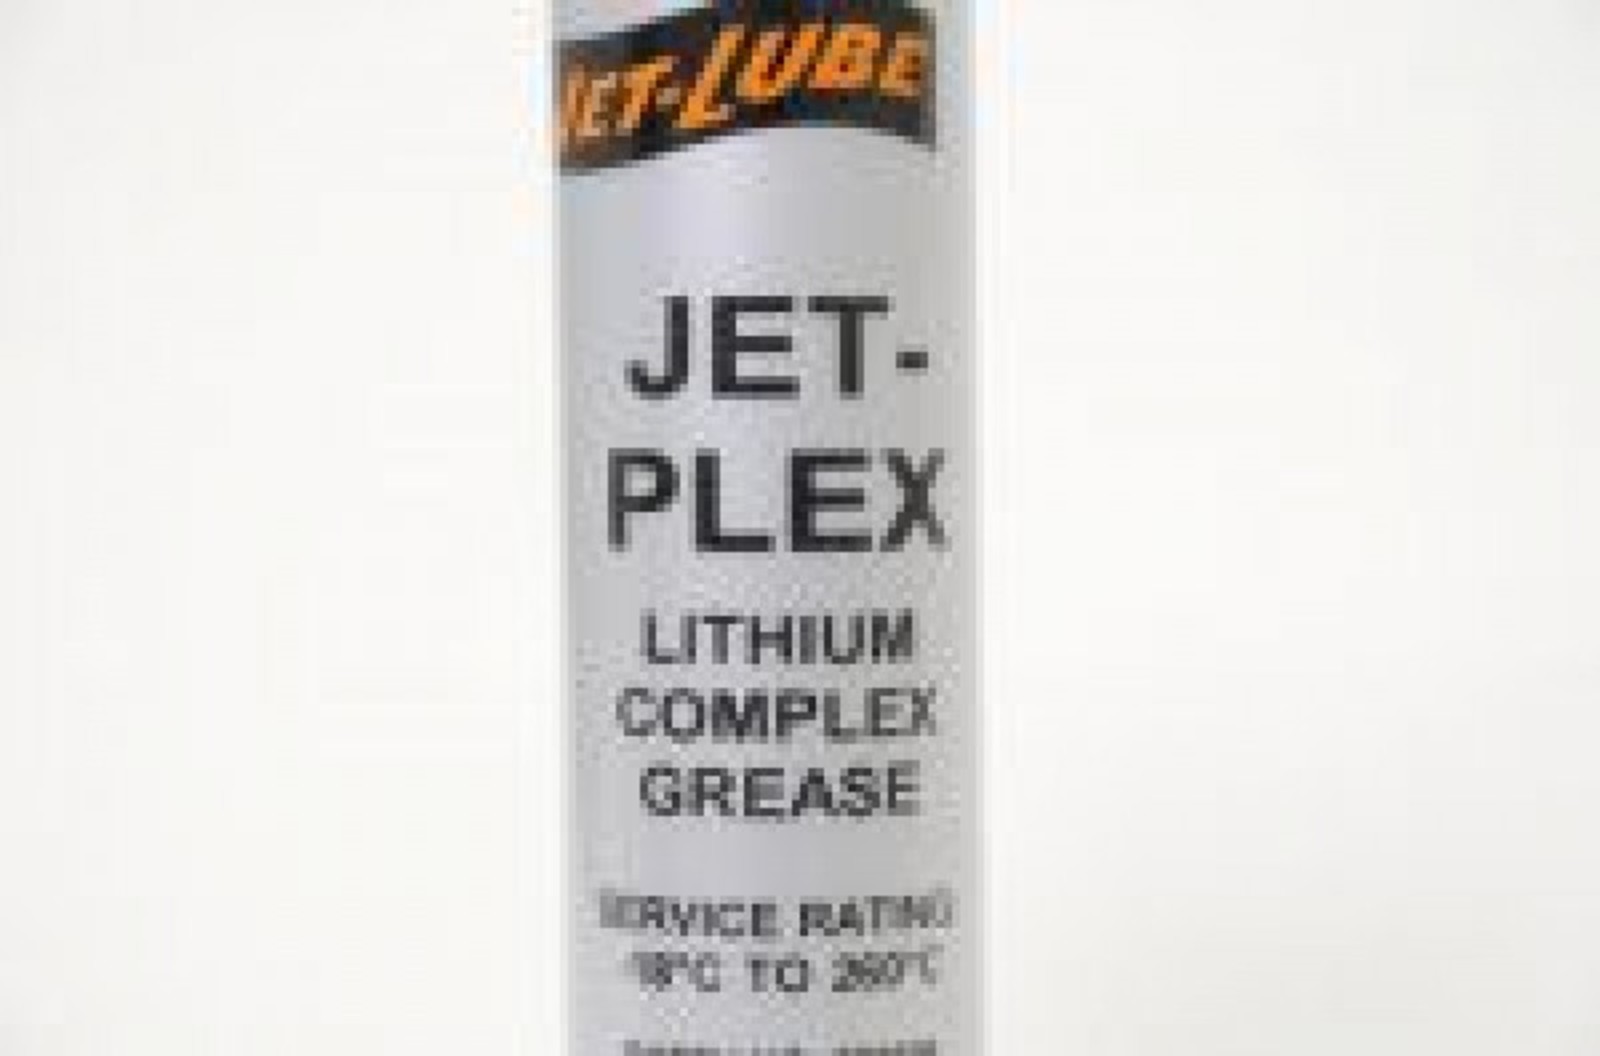 Grease Jet Plex Lithium 400 Gram